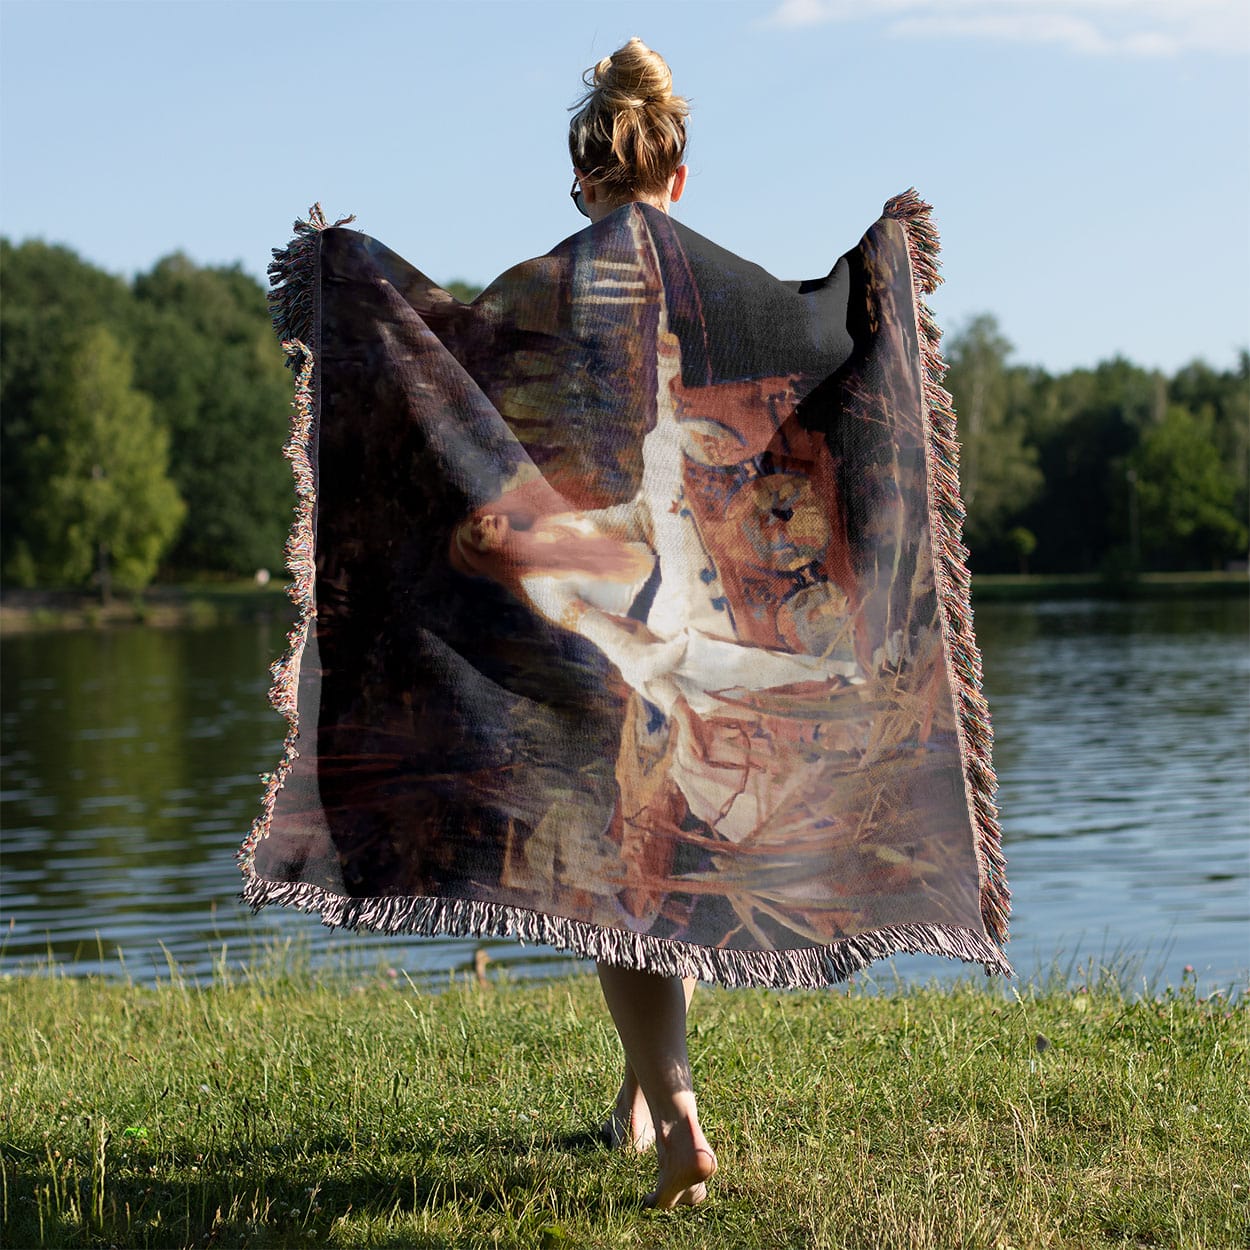 Victorian Era Moody Woven Blanket Held on a Woman's Back Outside